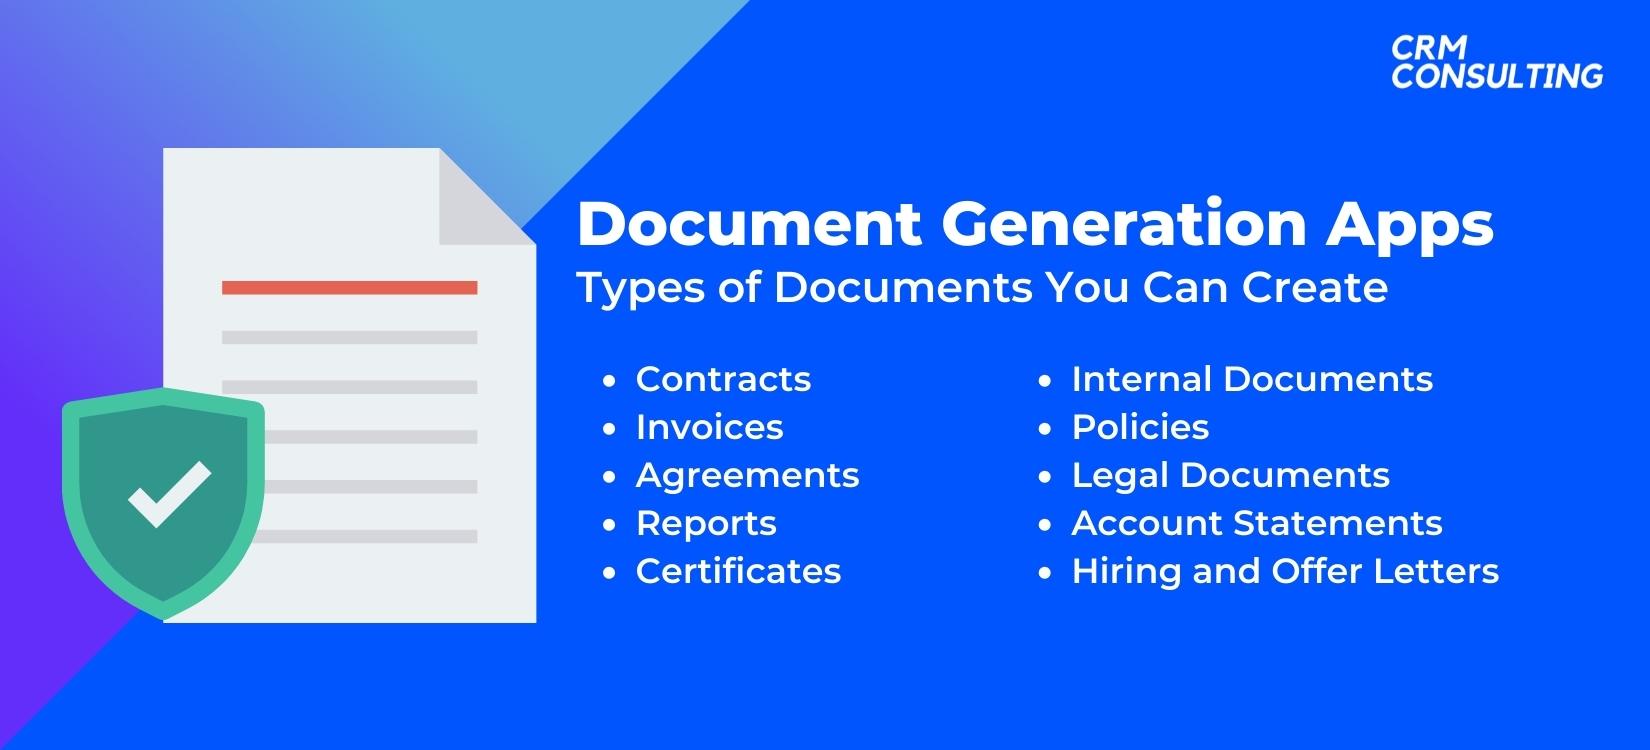 Document Generation types of document